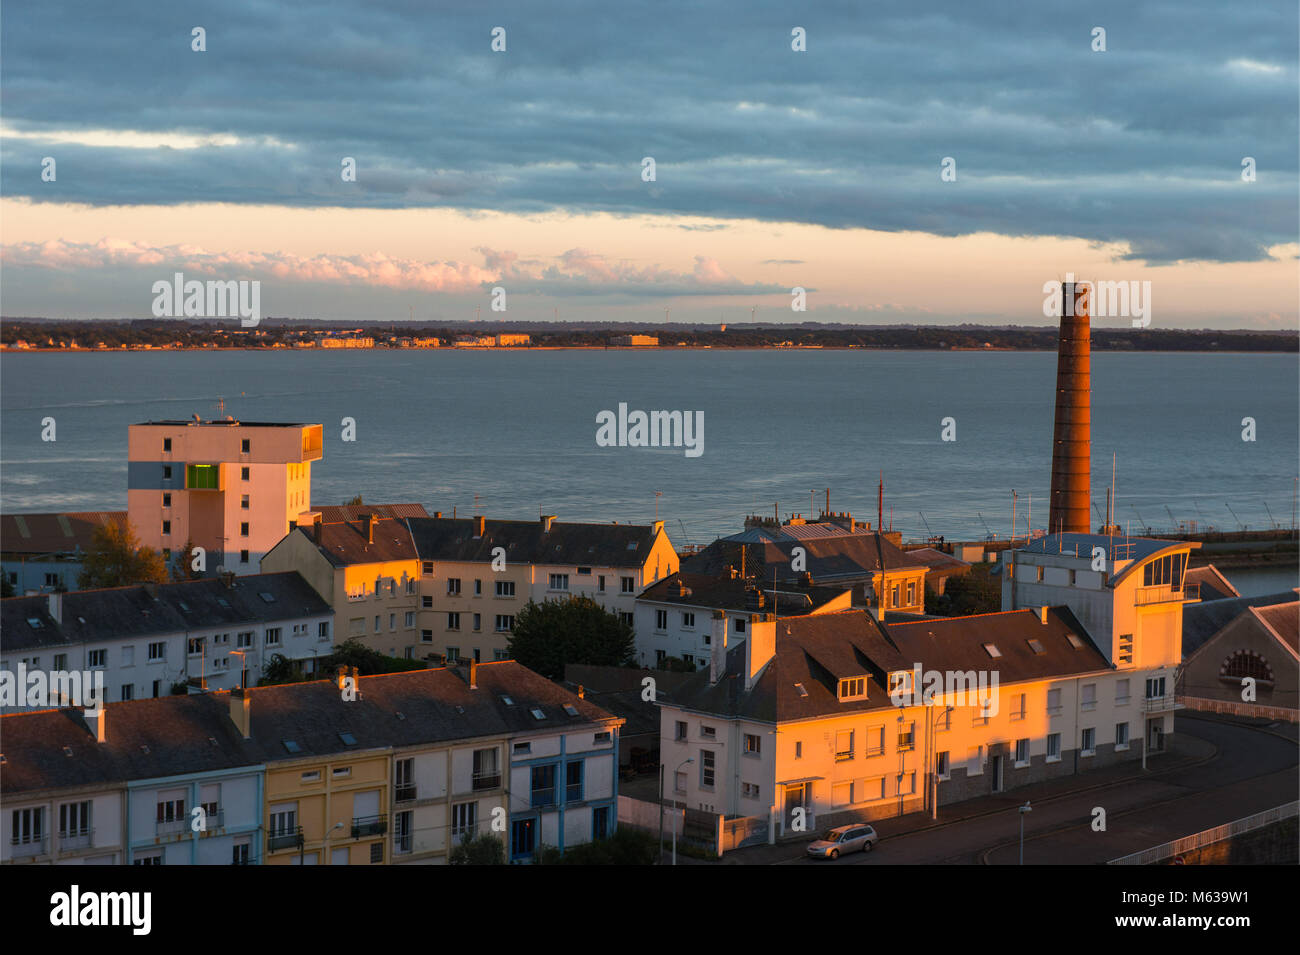 Saint Nazaire, Loire estuary on the Atlantic Ocean. France. Stock Photo